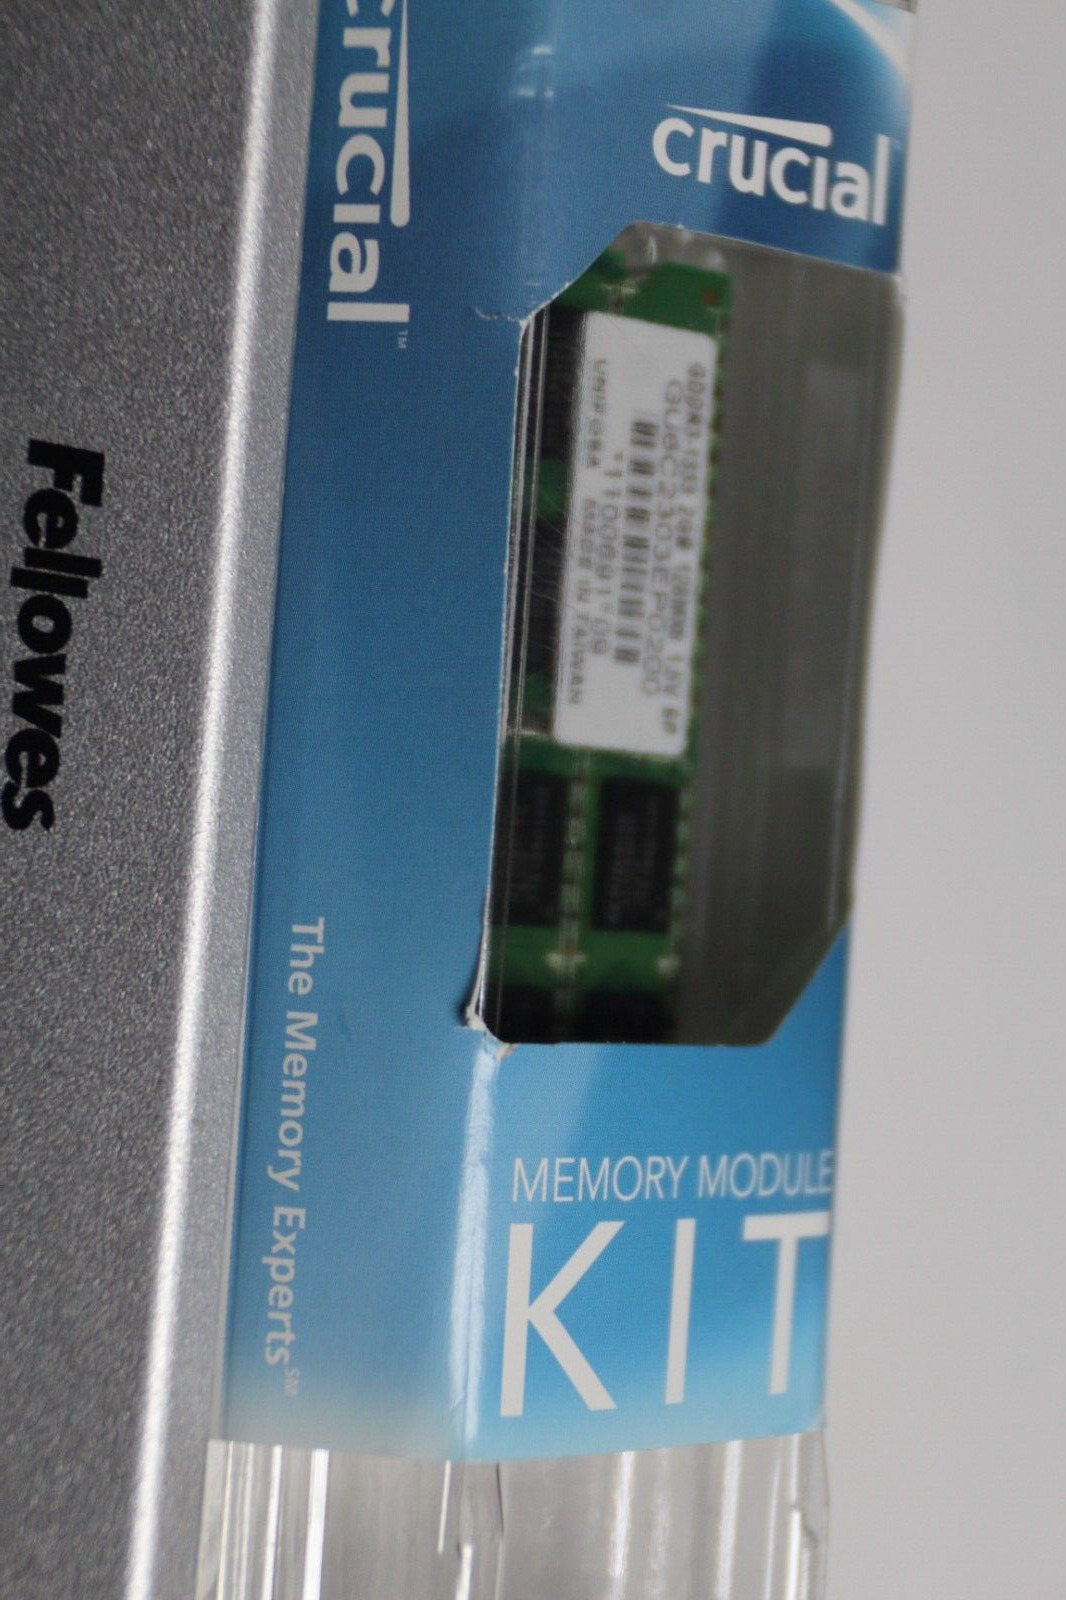 Set of 2 Crucial each 2 GB Memory Module Kit  GDDR3-1333 128MX8 Computer Memory